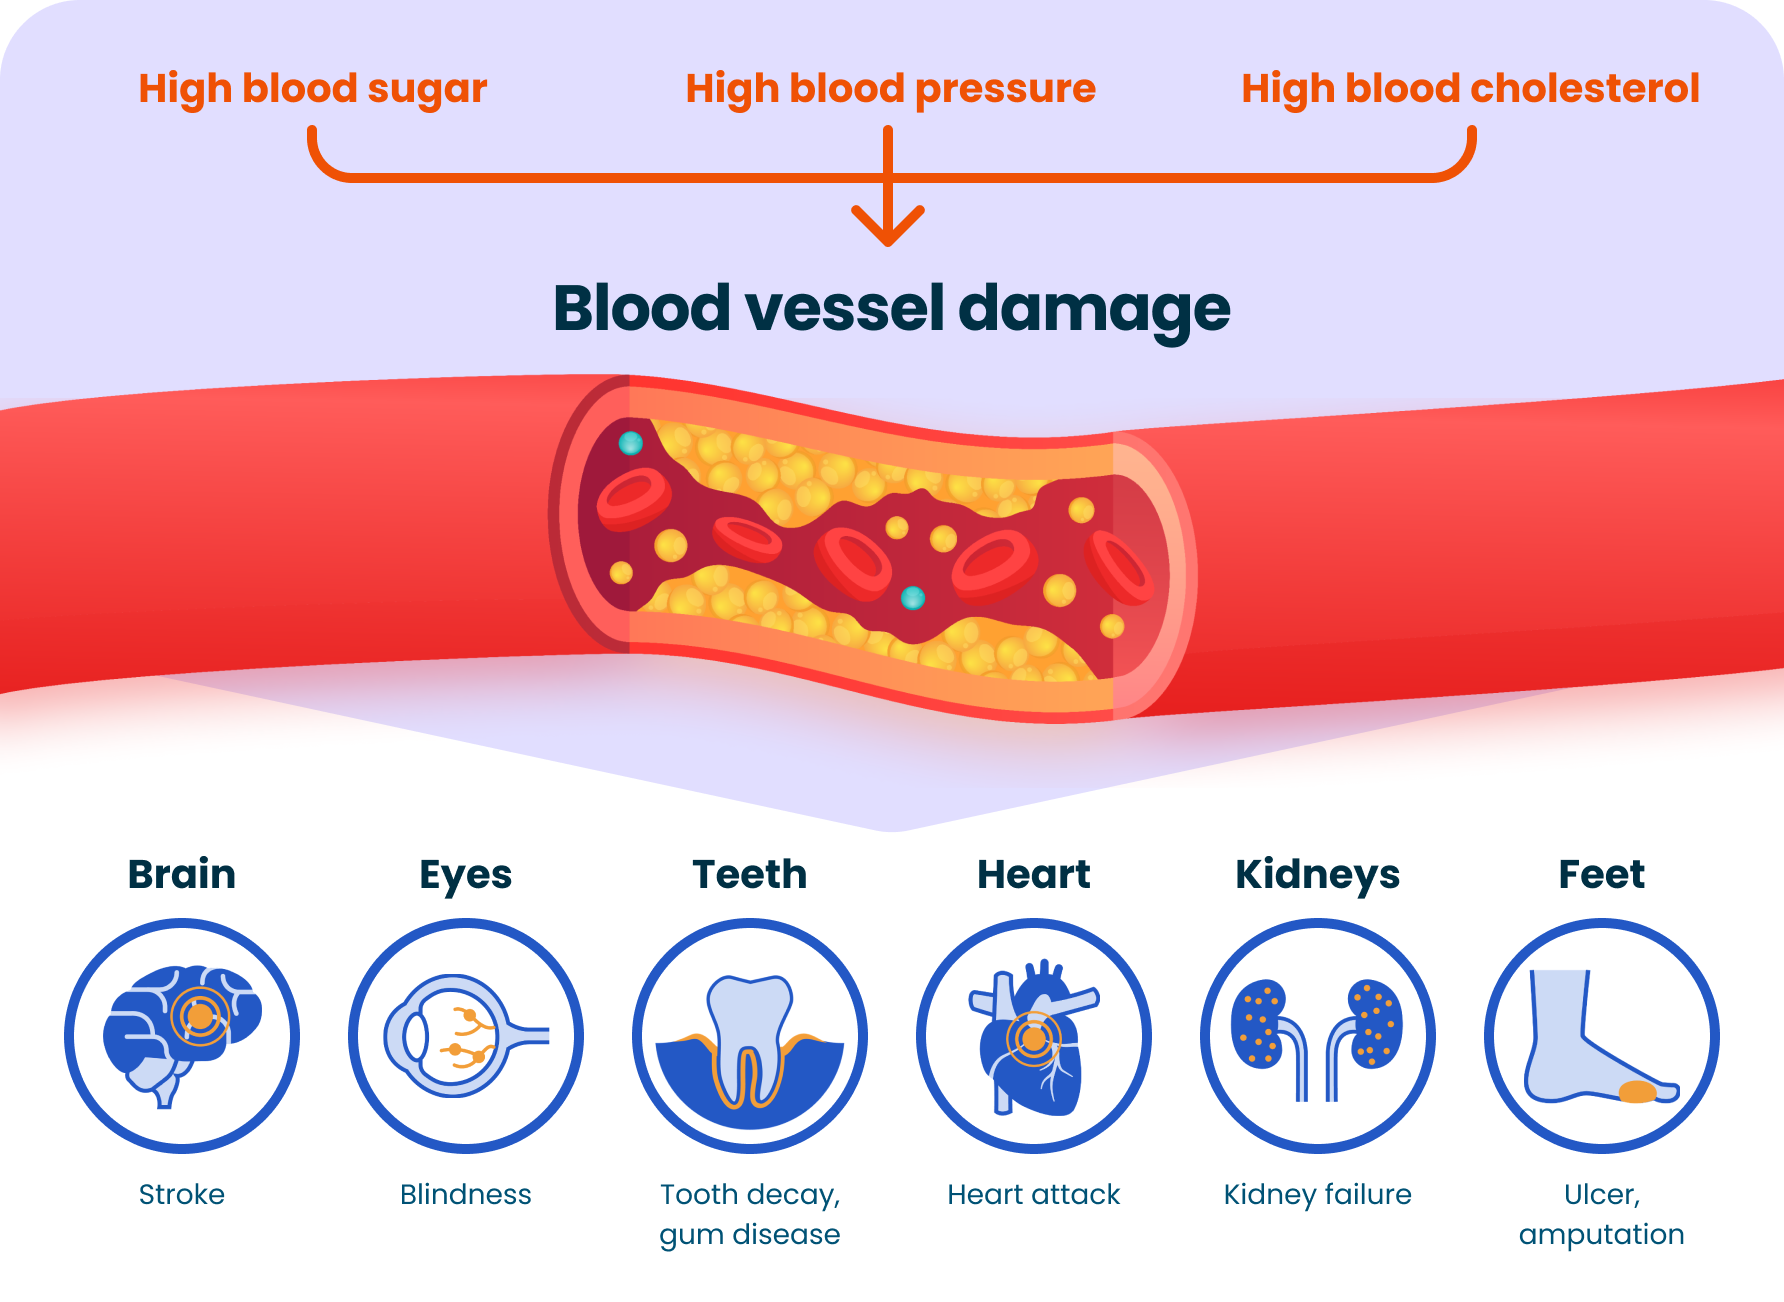 High blood sugar, high blood pressure and high blood cholesterol will damage blood vessels.